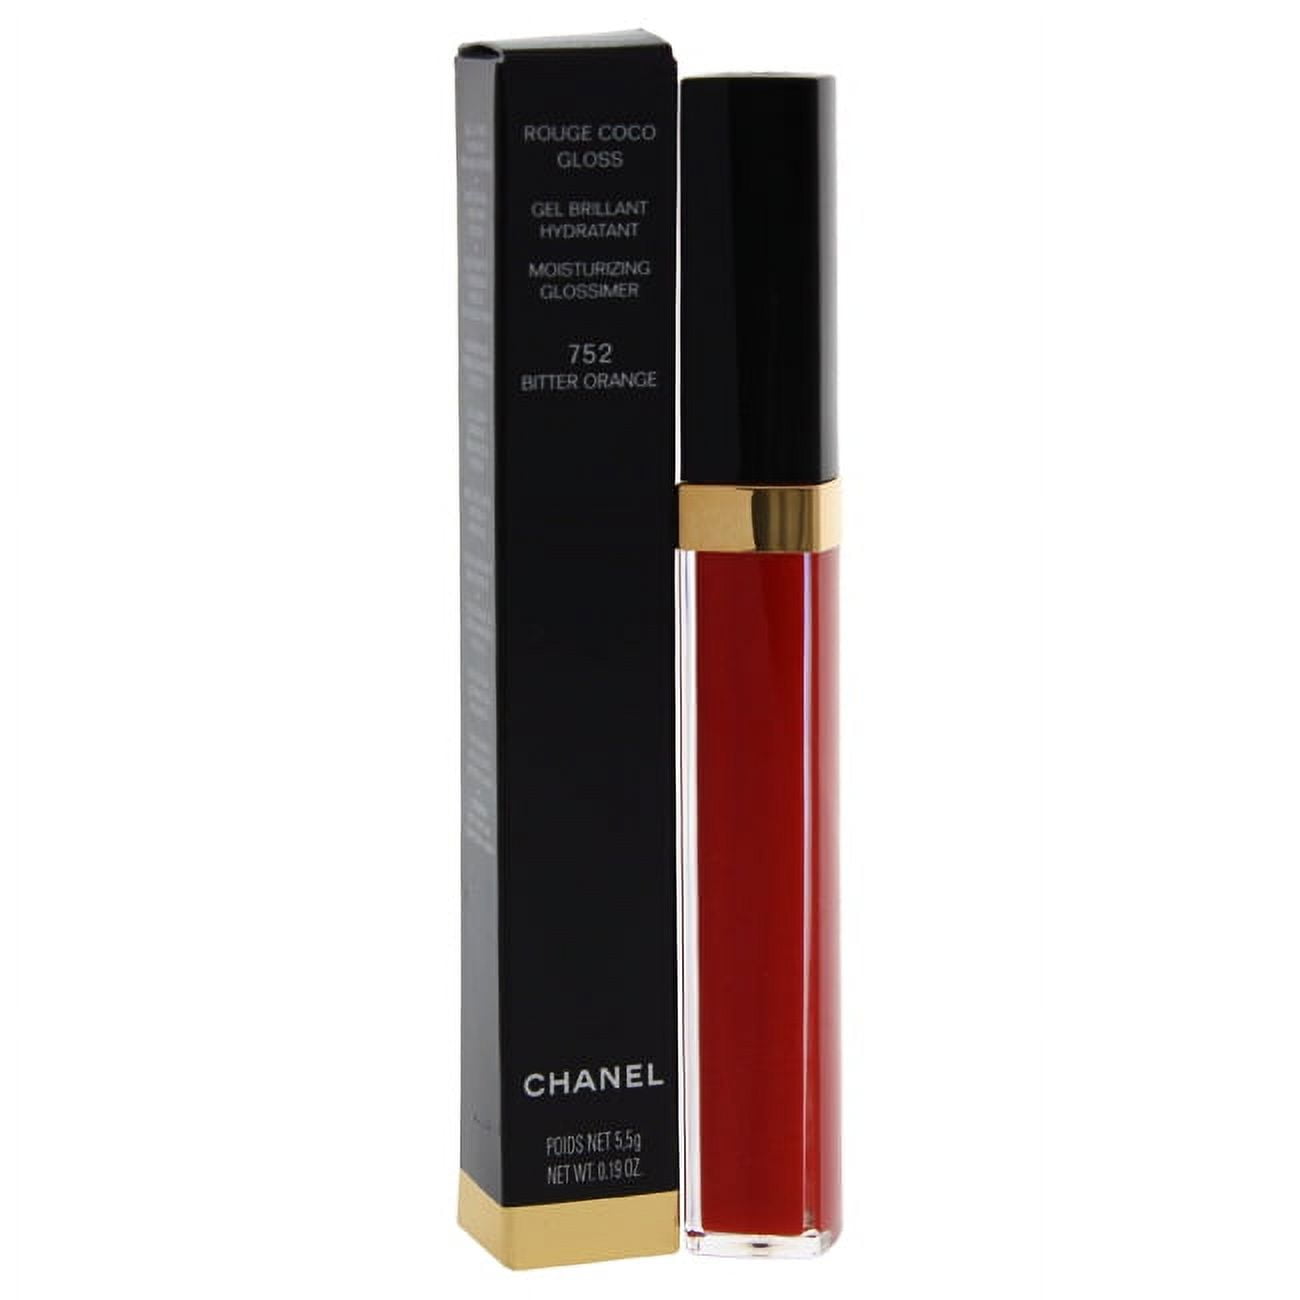 Lot of 5 CHANEL Rouge COCO Gloss BITTER ORANGE 752 lipstick lip gloss  samples